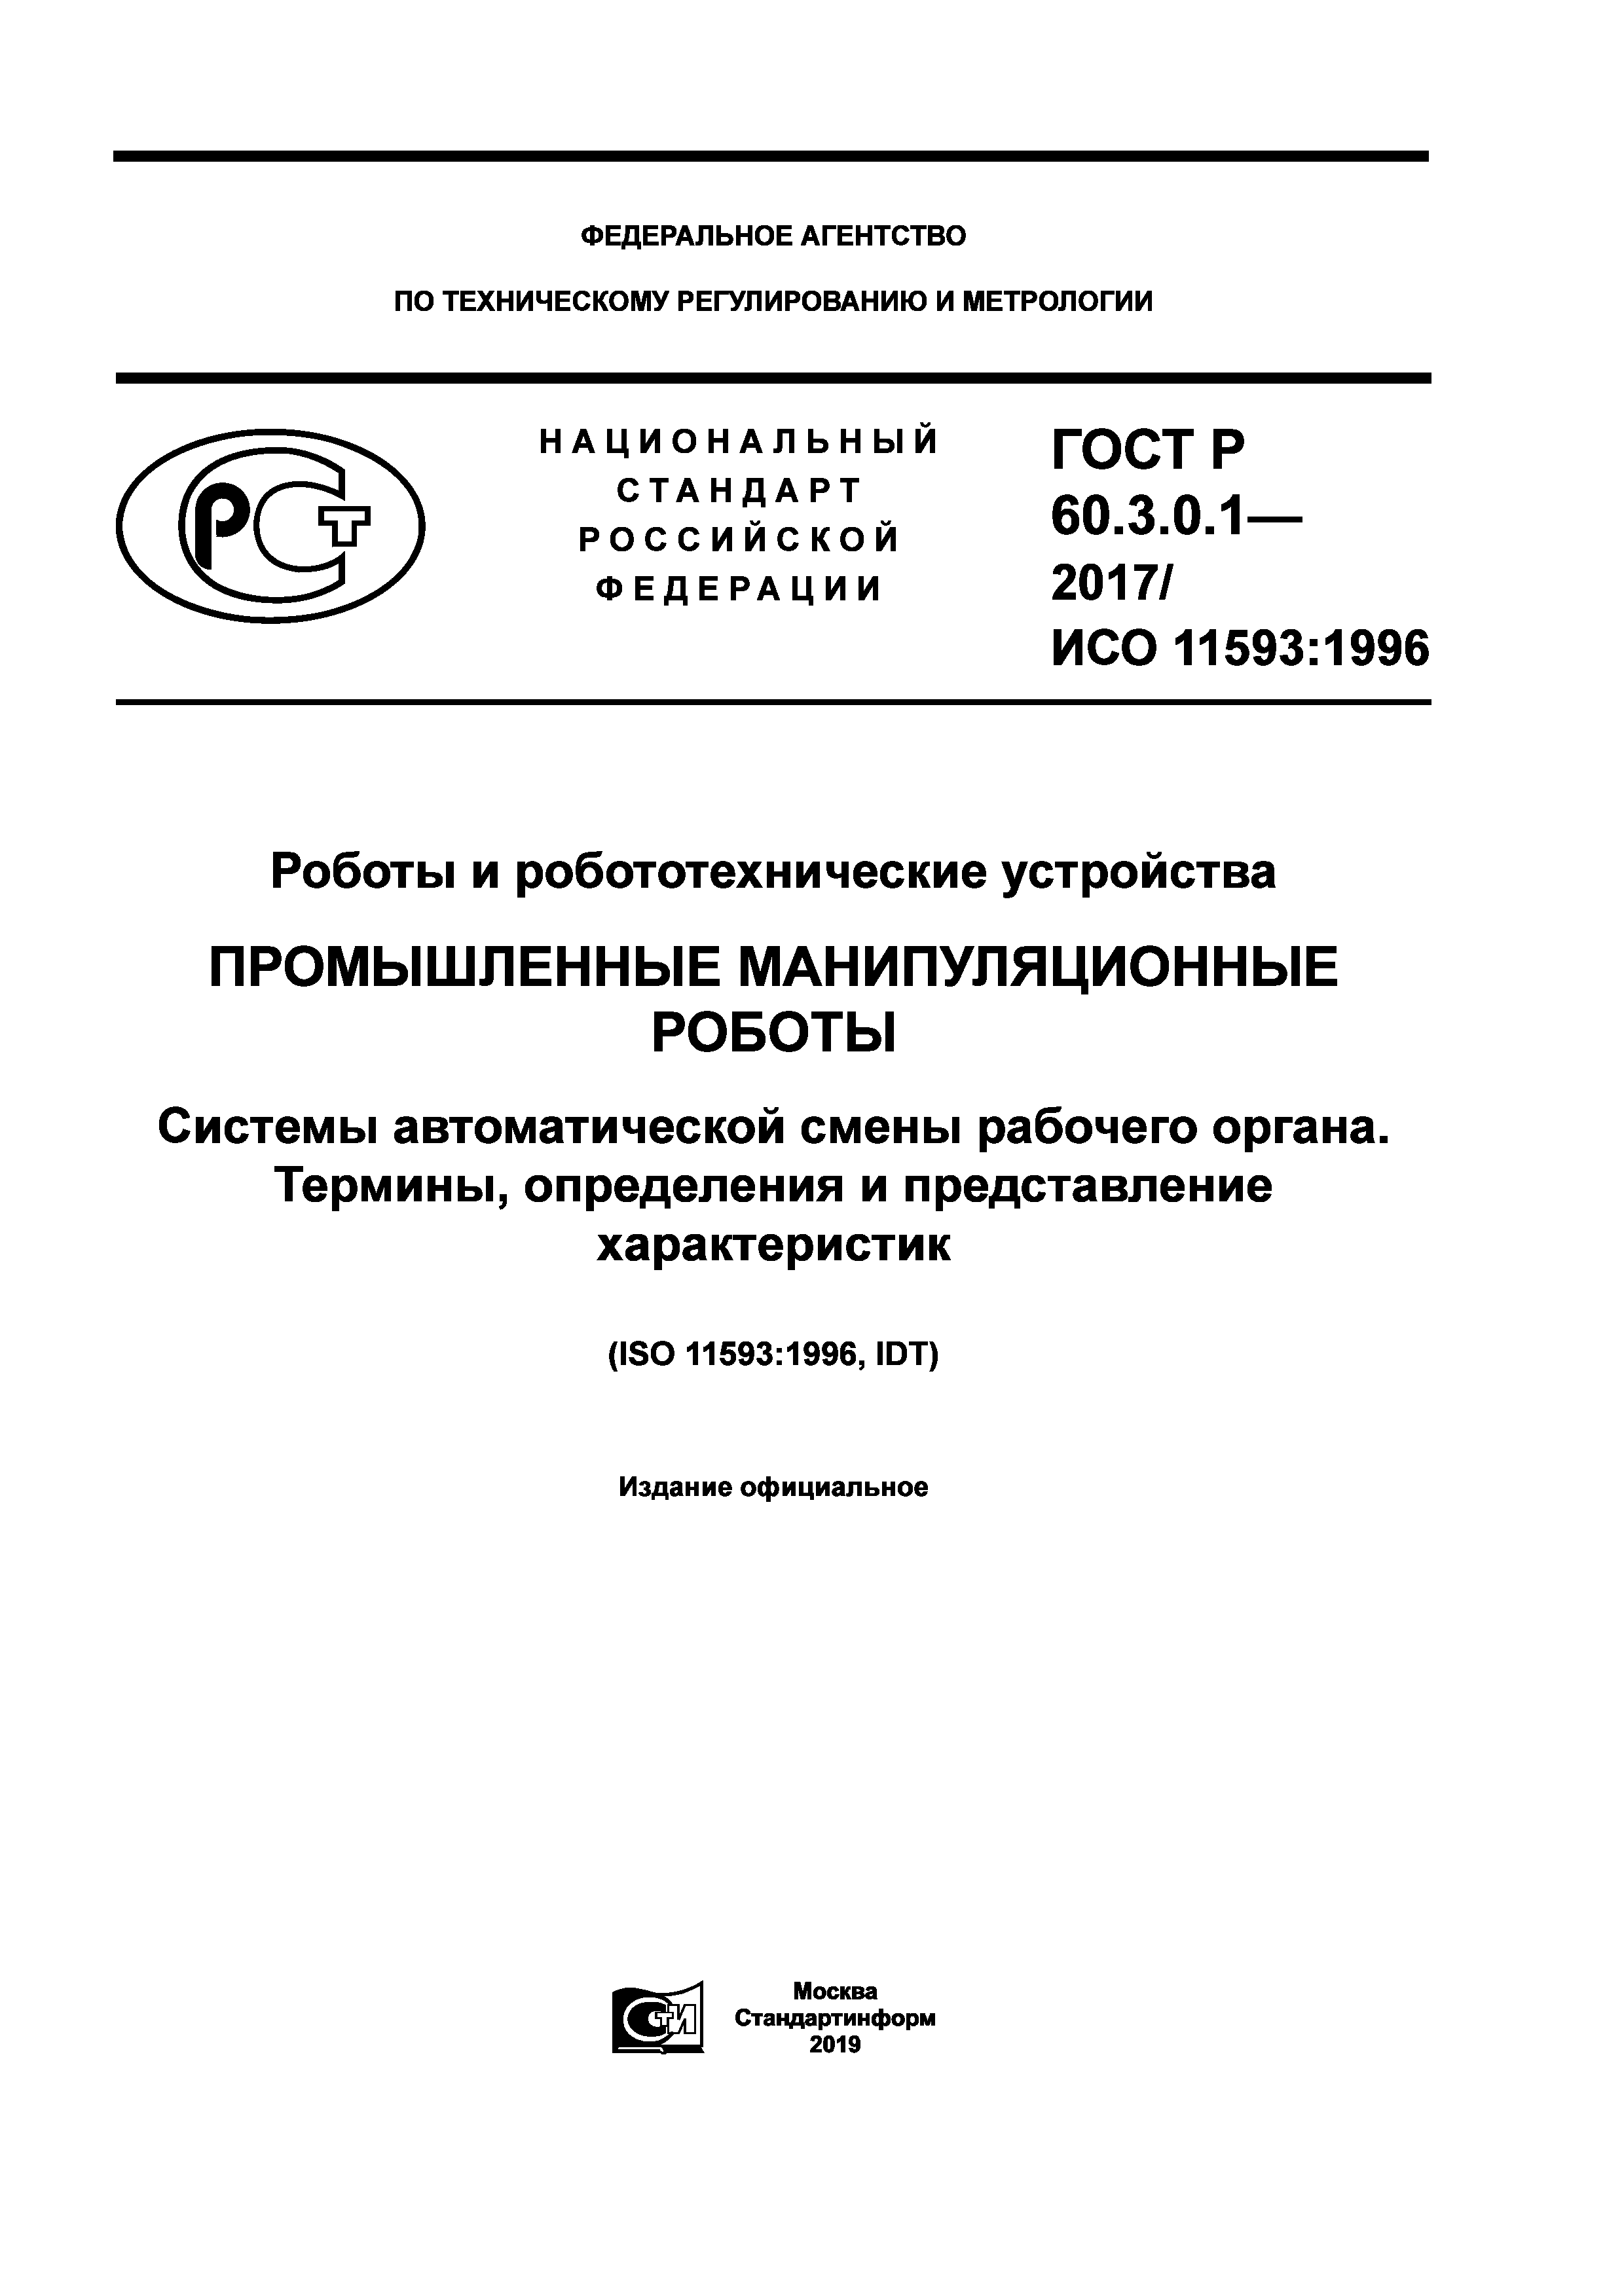 ГОСТ Р 60.3.0.1-2017